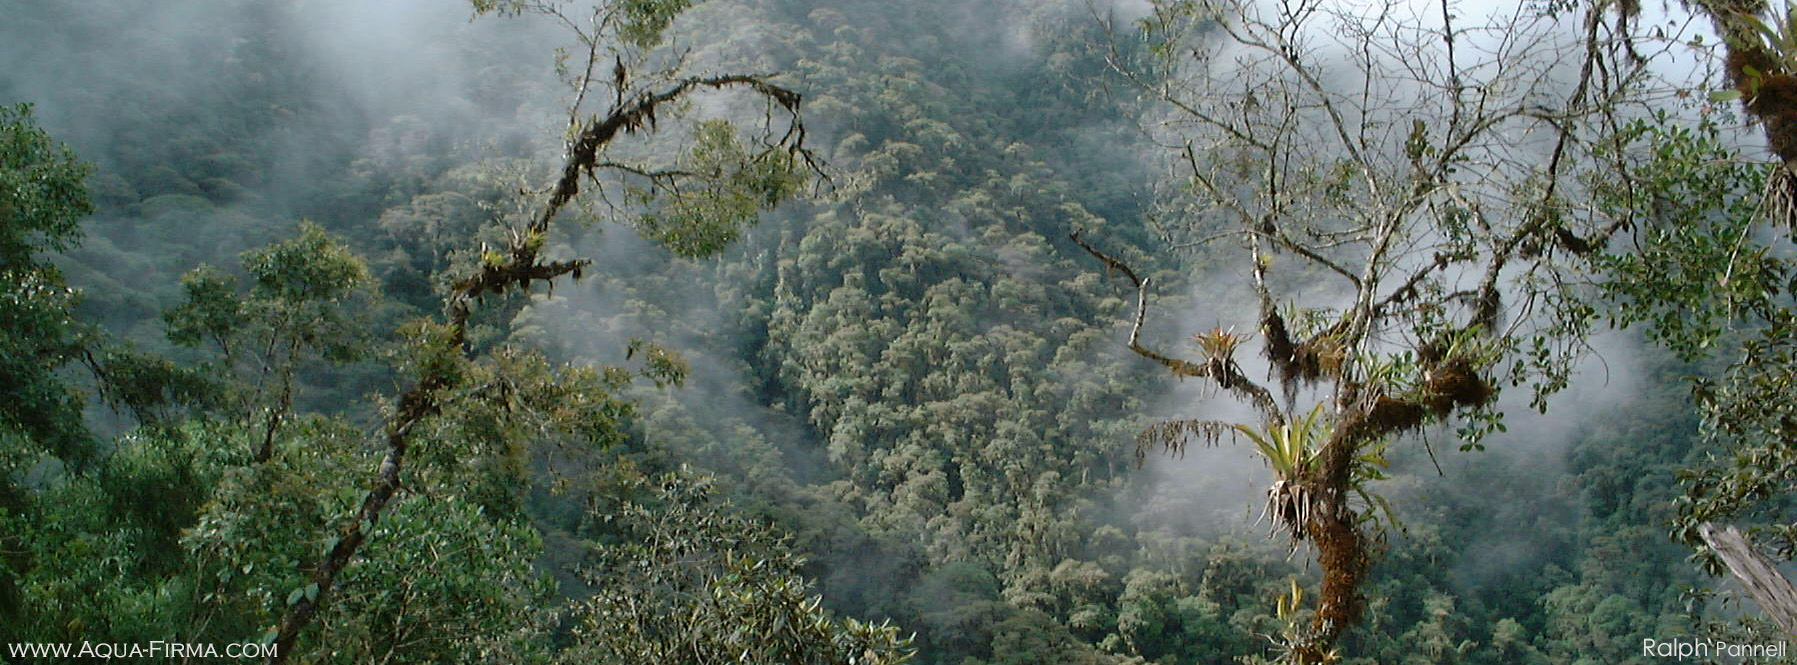 Choco-Andean Rainforest Corridor Ecuador cloud forest Mindo